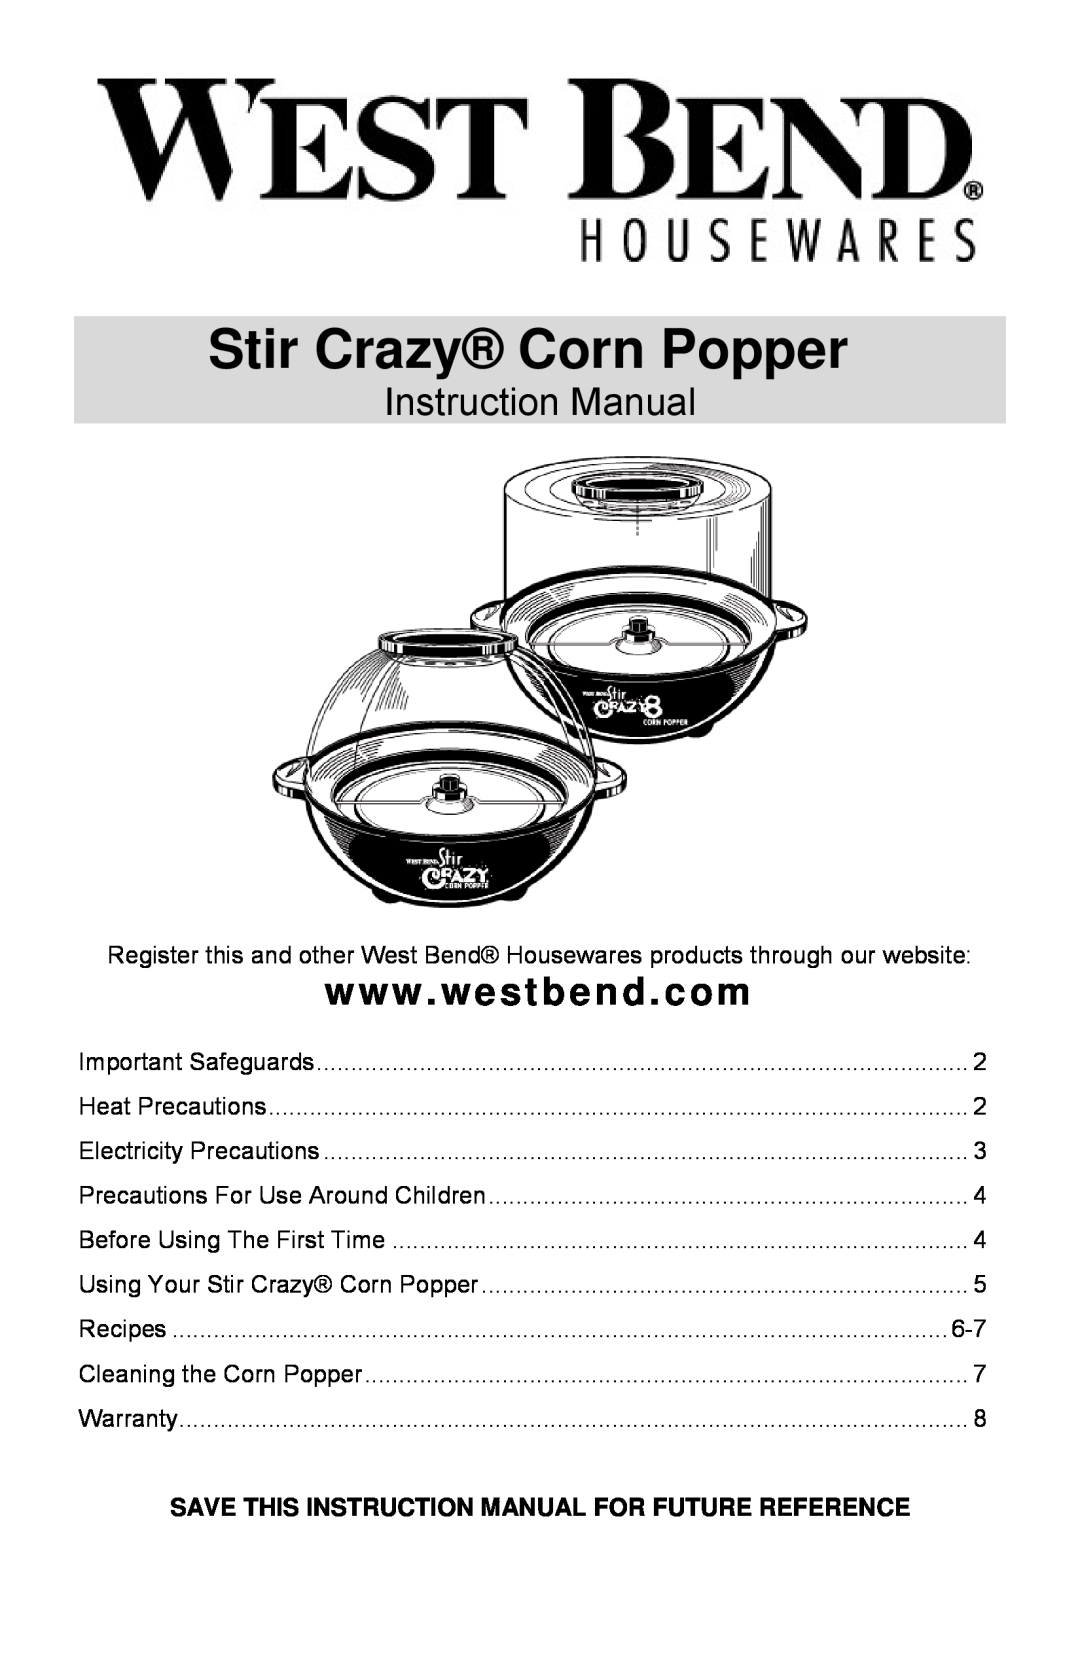 West Bend 8 quart, 6 quart instruction manual Stir Crazy Corn Popper, Instruction Manual 